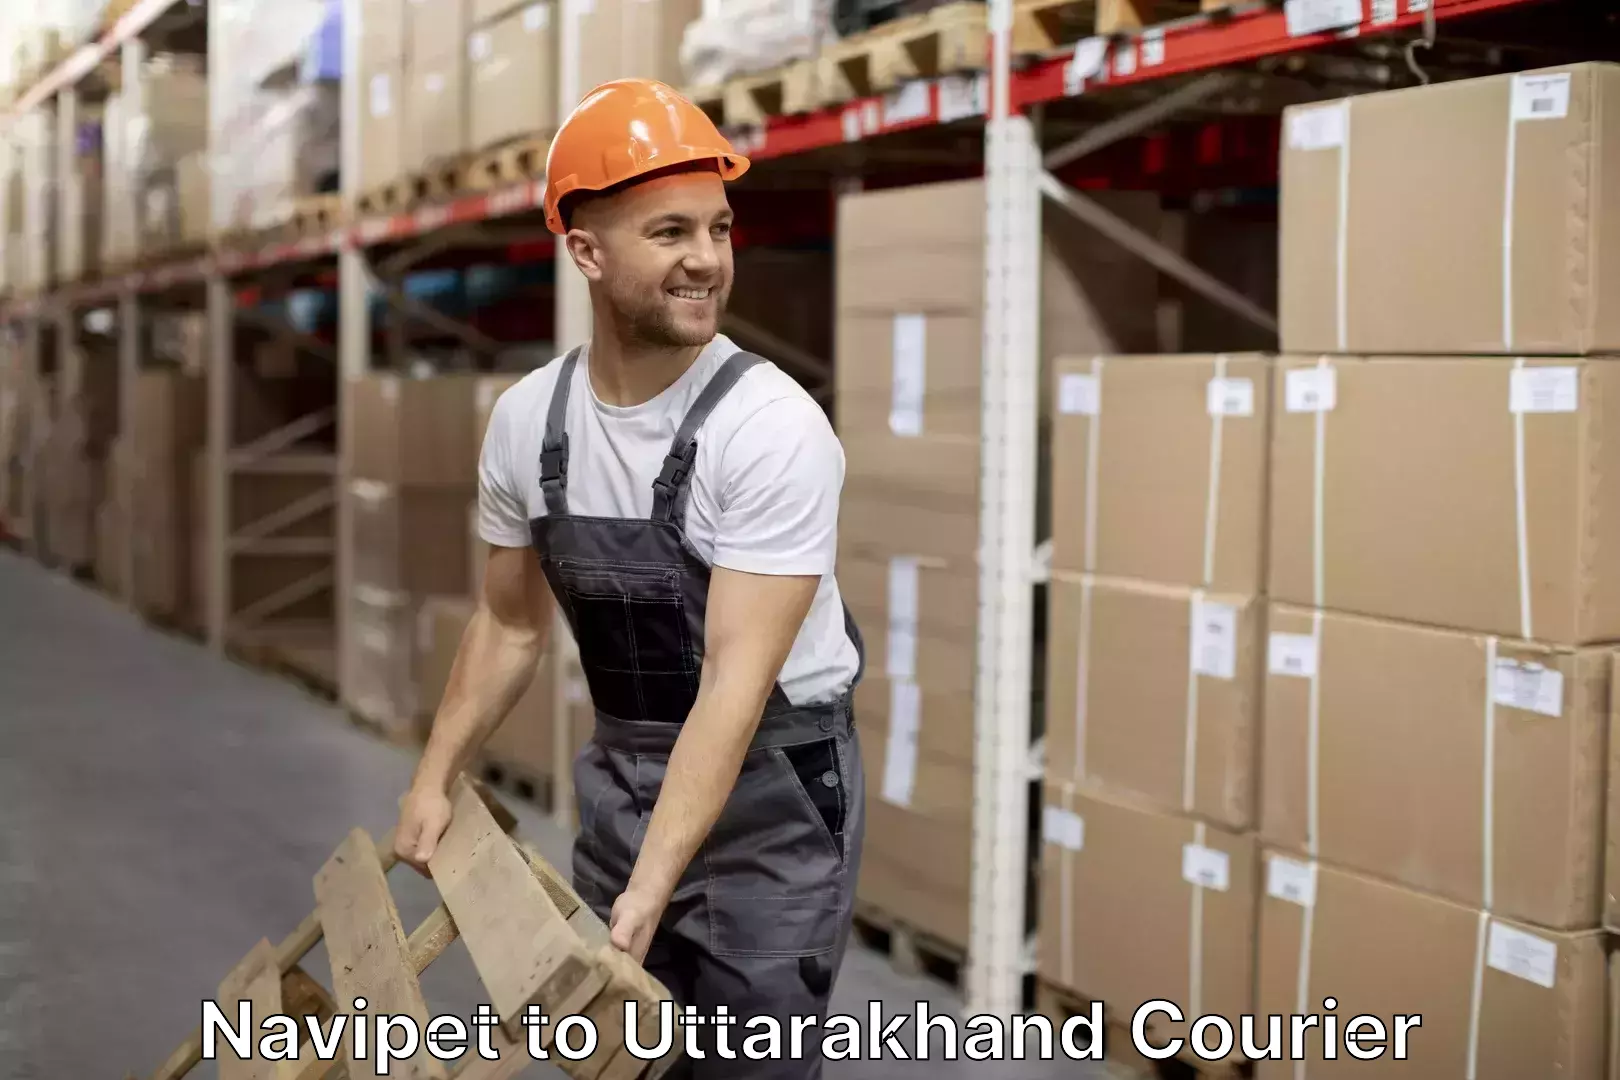 Furniture delivery service Navipet to Uttarakhand